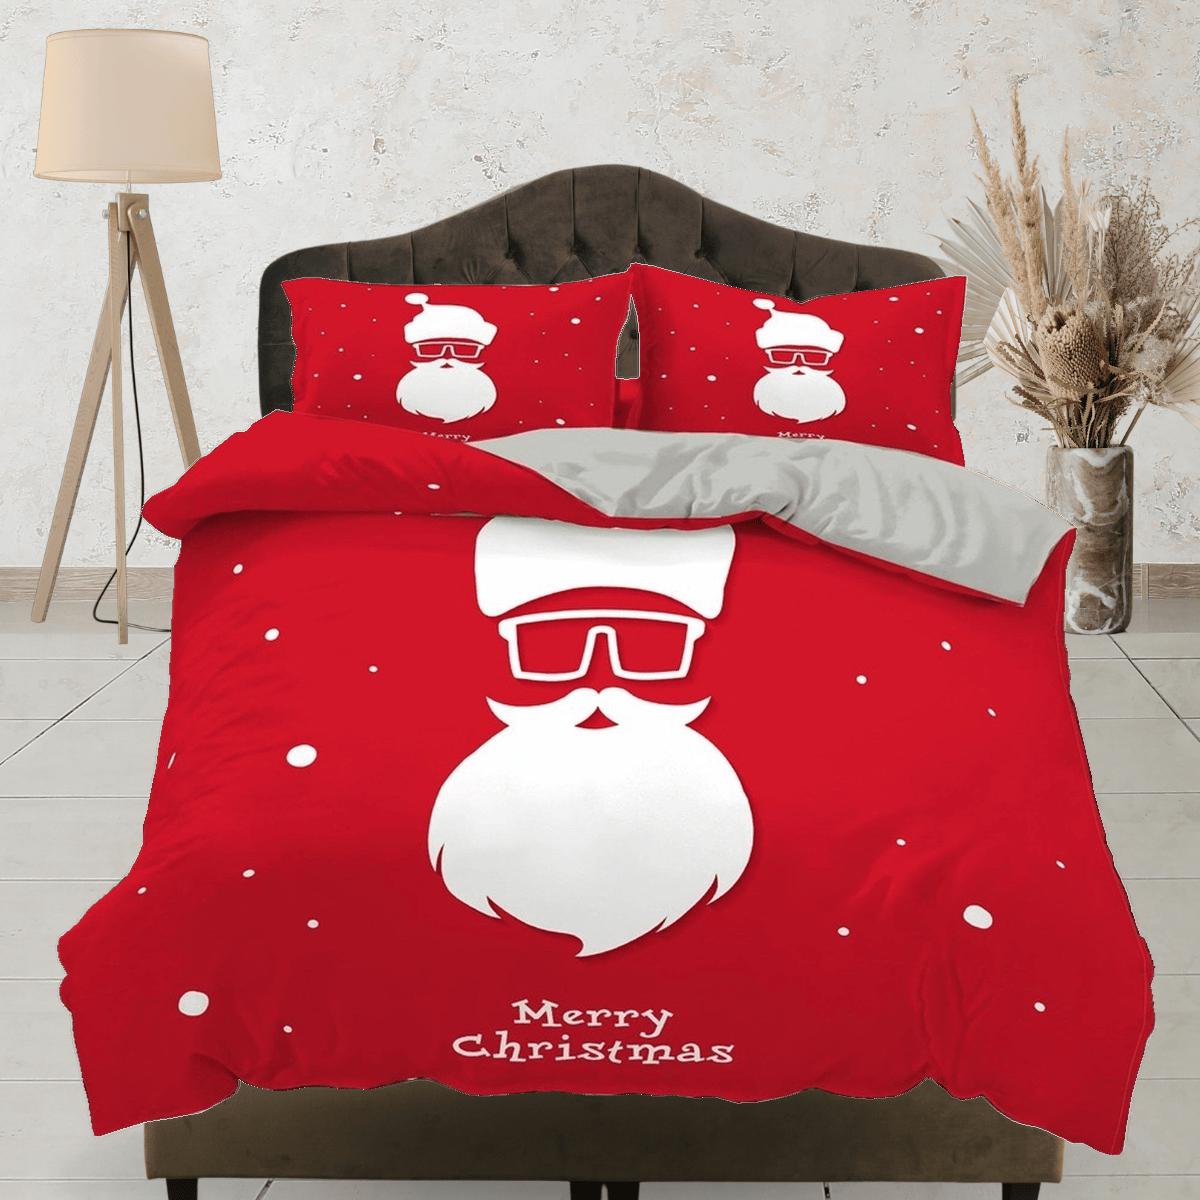 daintyduvet Cool Santa Claus specs Christmas bedding, pillowcase holiday gift duvet cover king queen twin toddler bedding baby Christmas farmhouse decor